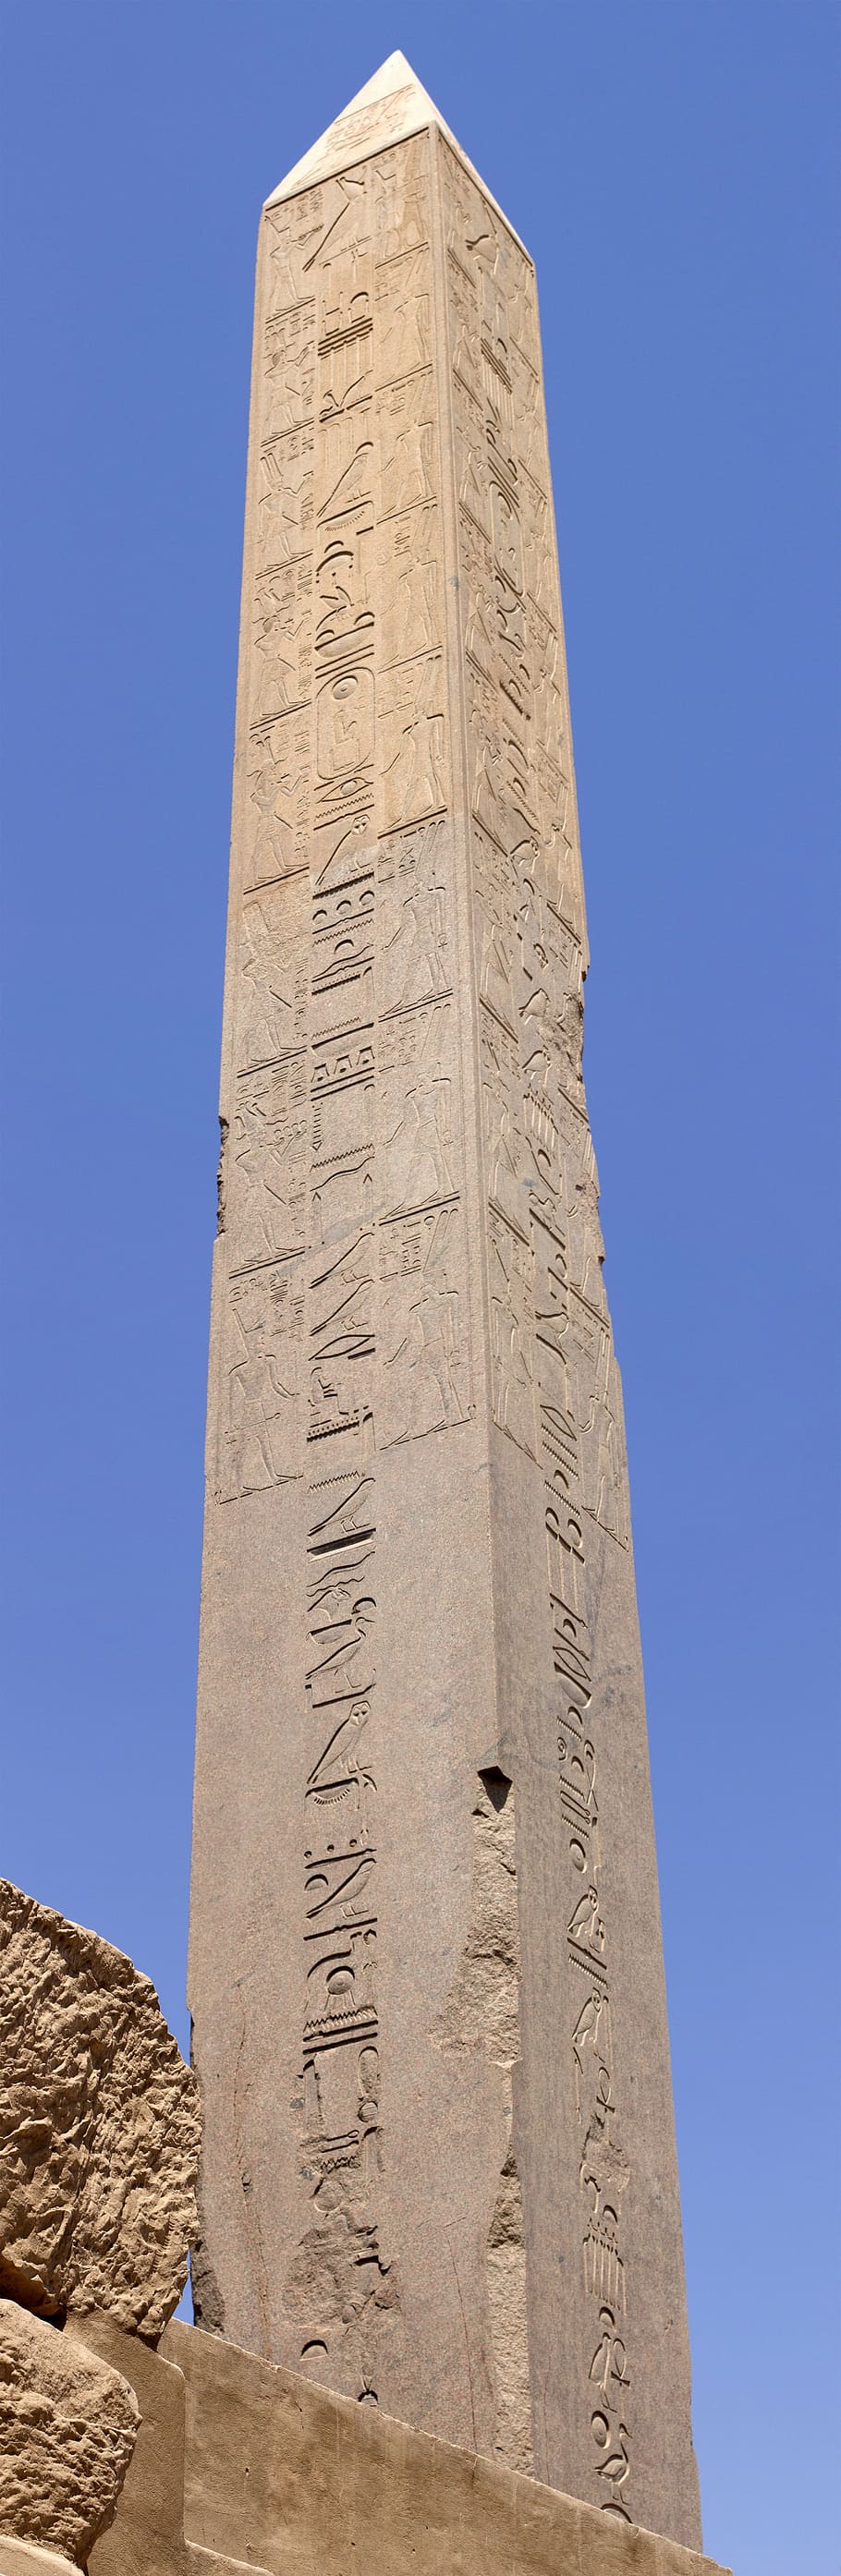 obelisk, karnak, kuil, nil, luxor, mesir, budaya, zaman kuno, mitologi, arsitektur